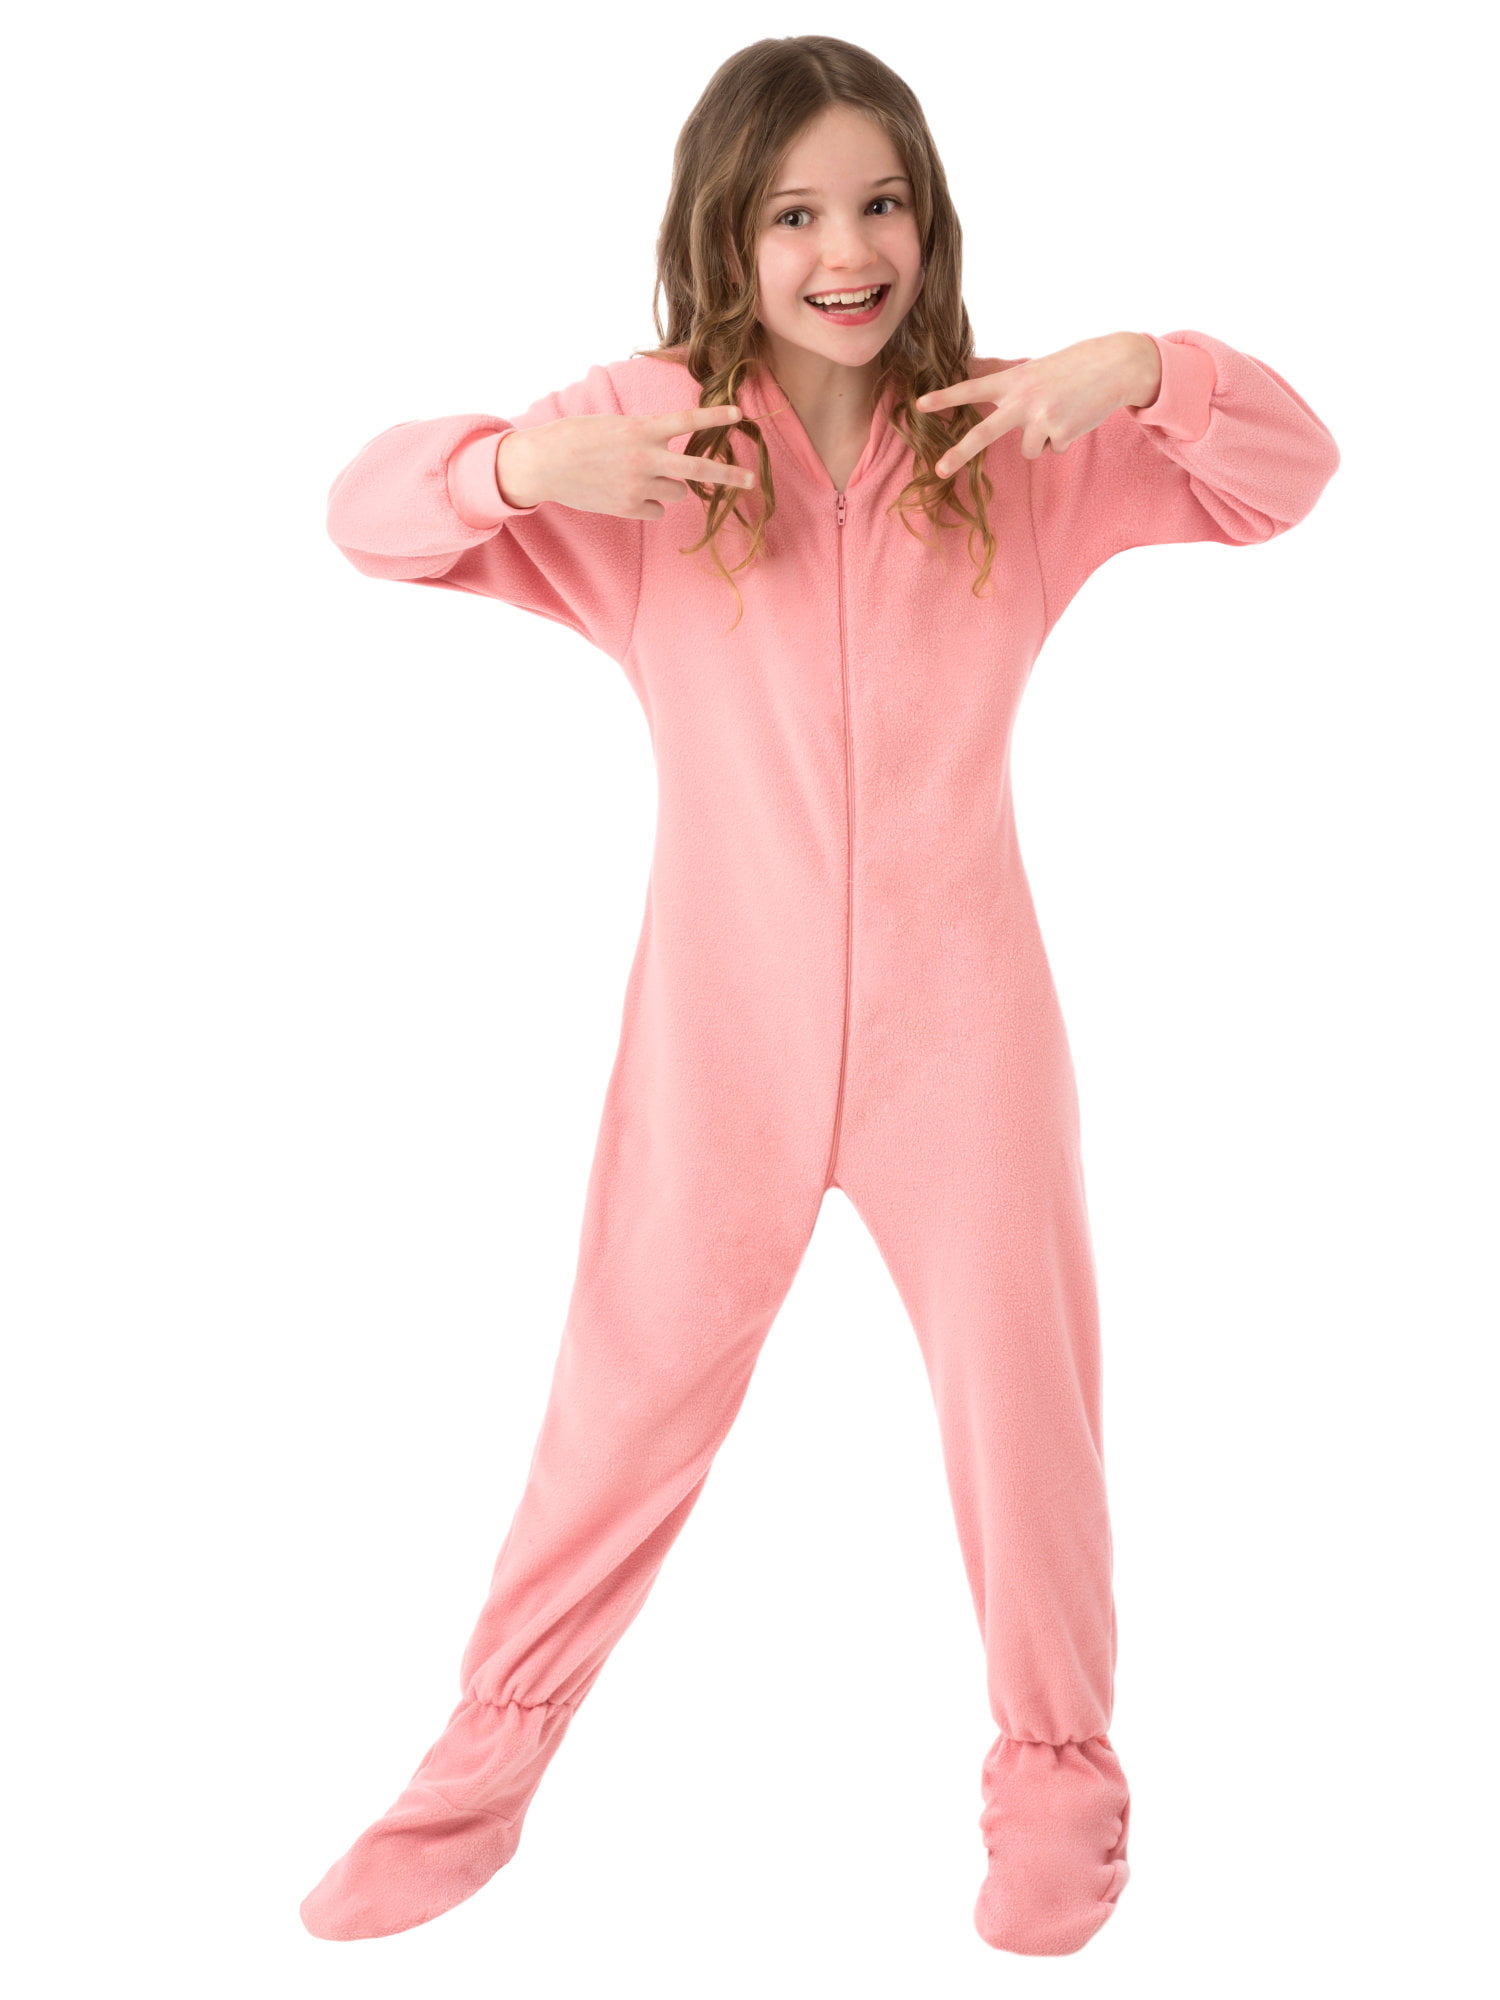 Toddler Pink Fleece Footed Pajamas Onesie Sleeper 12M 4T Little Girls Infant